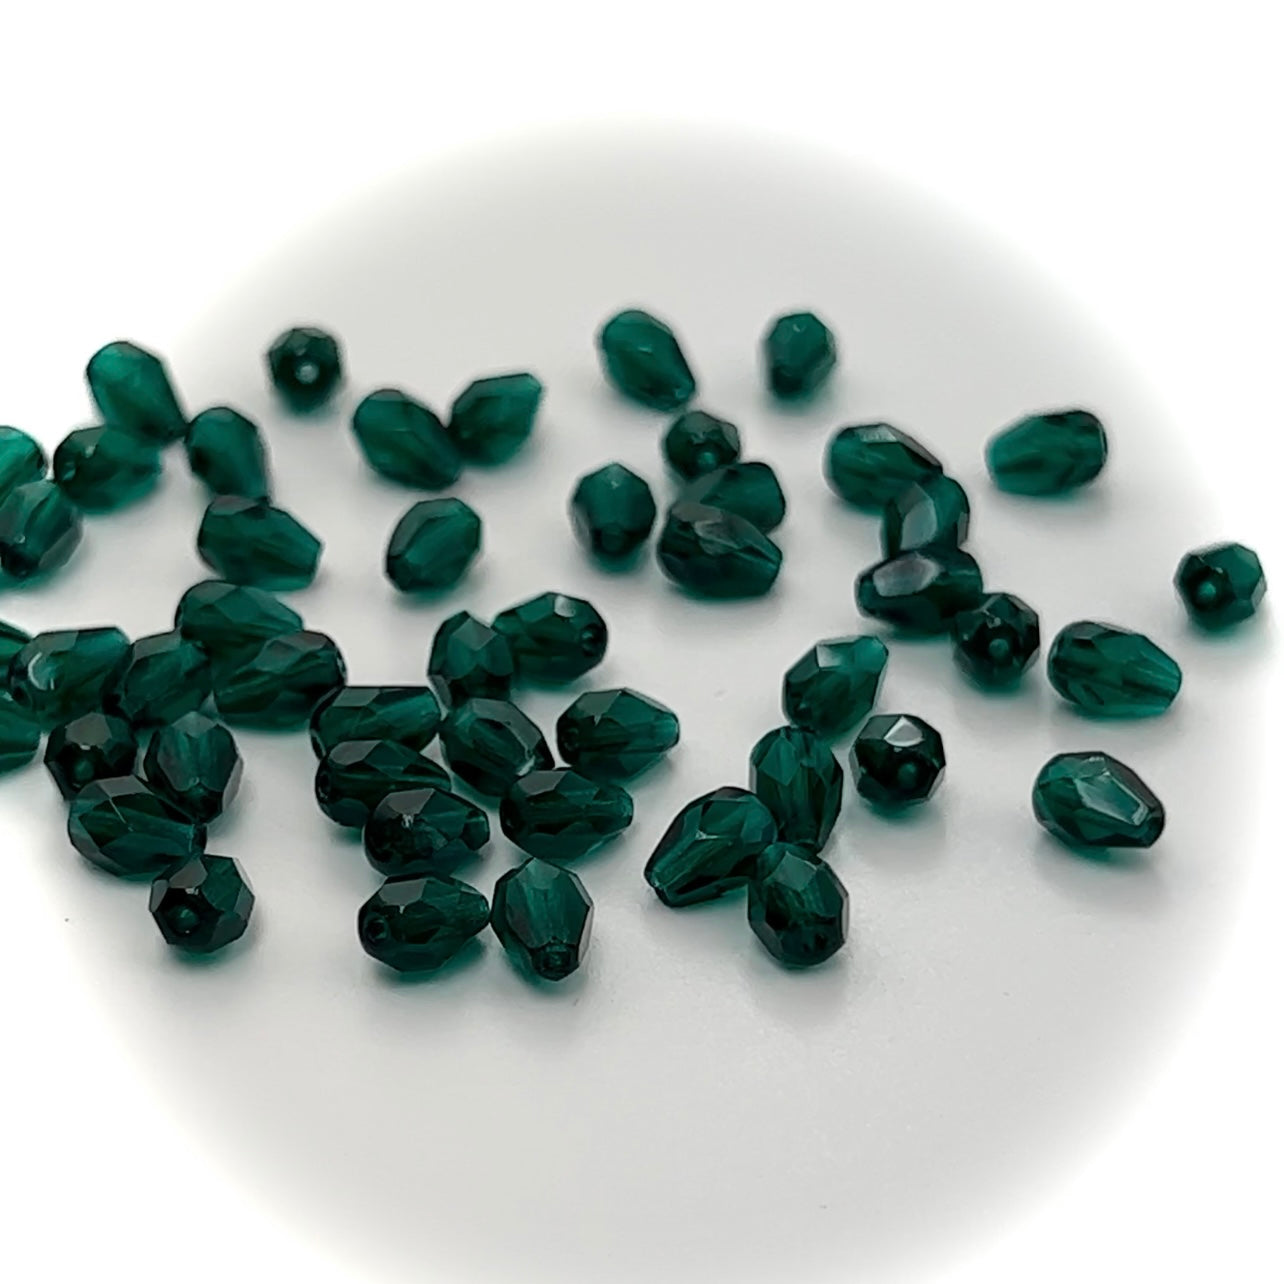 Czech Glass Pear Shaped Fire Polished Beads 8x6mm Emerald green Tear Drops 50 pieces J038